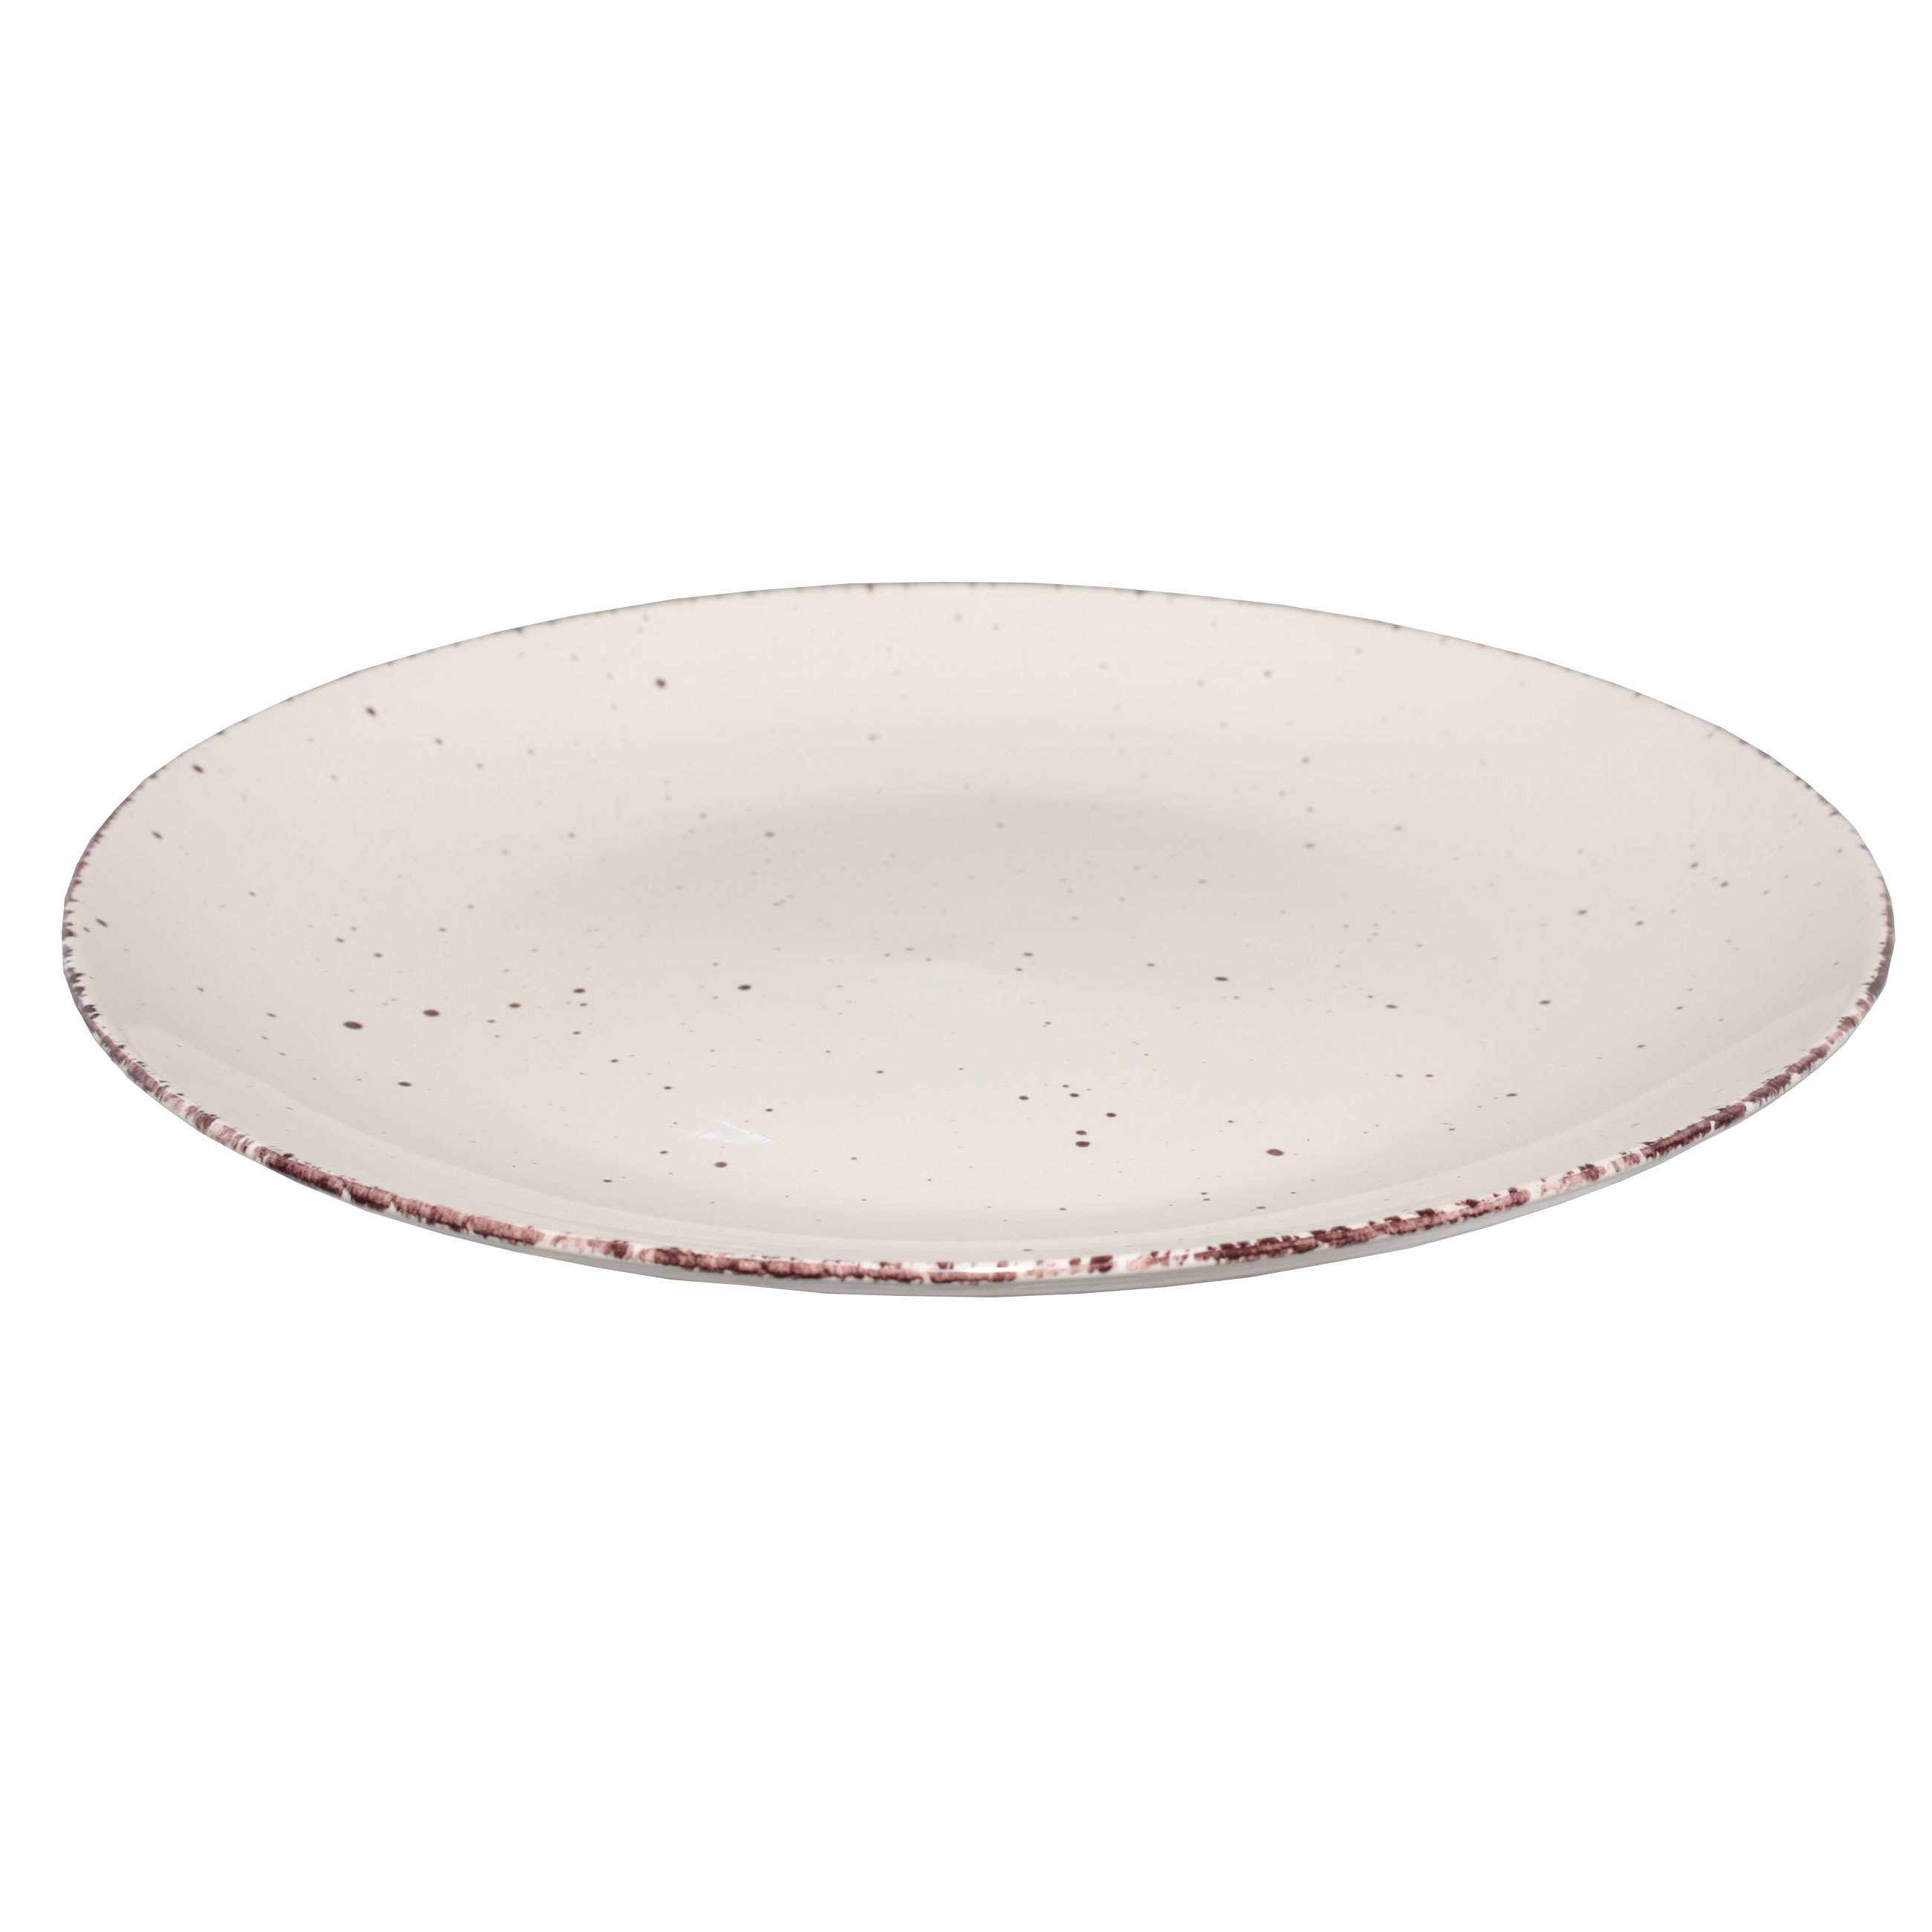 Тарелка обеденная, 27 см, 2 шт, керамика, бежевая, в крапинку, Speckled